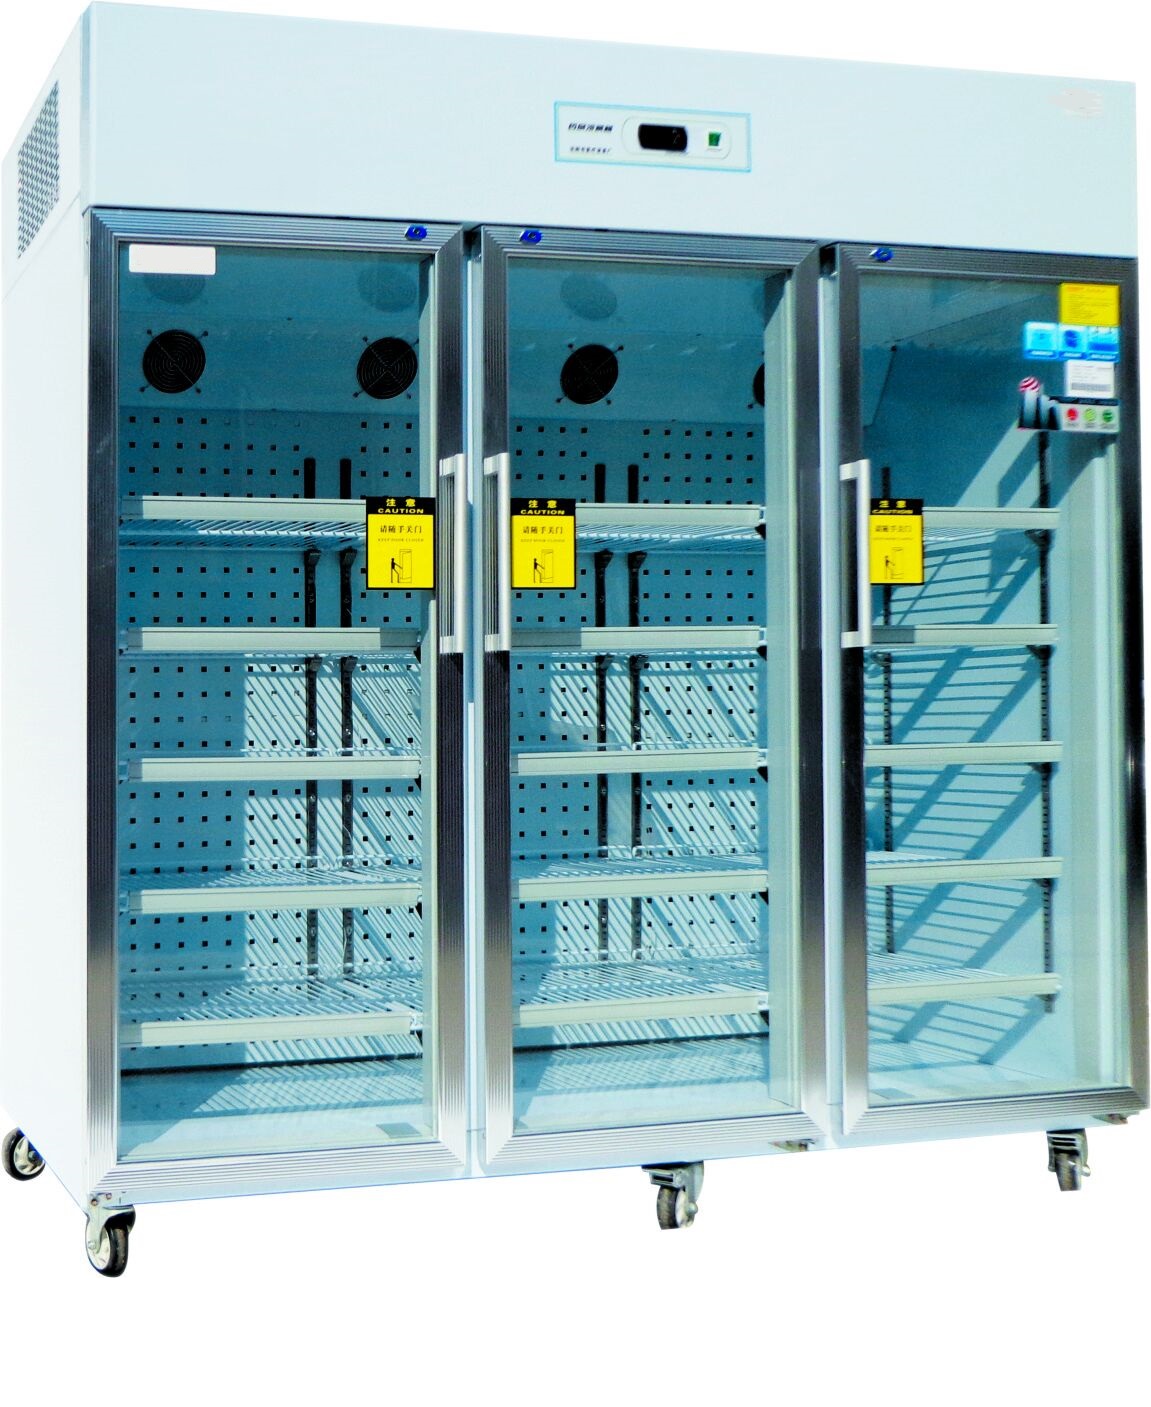 LT1380L 1600L Pharmaceutical refrigerator